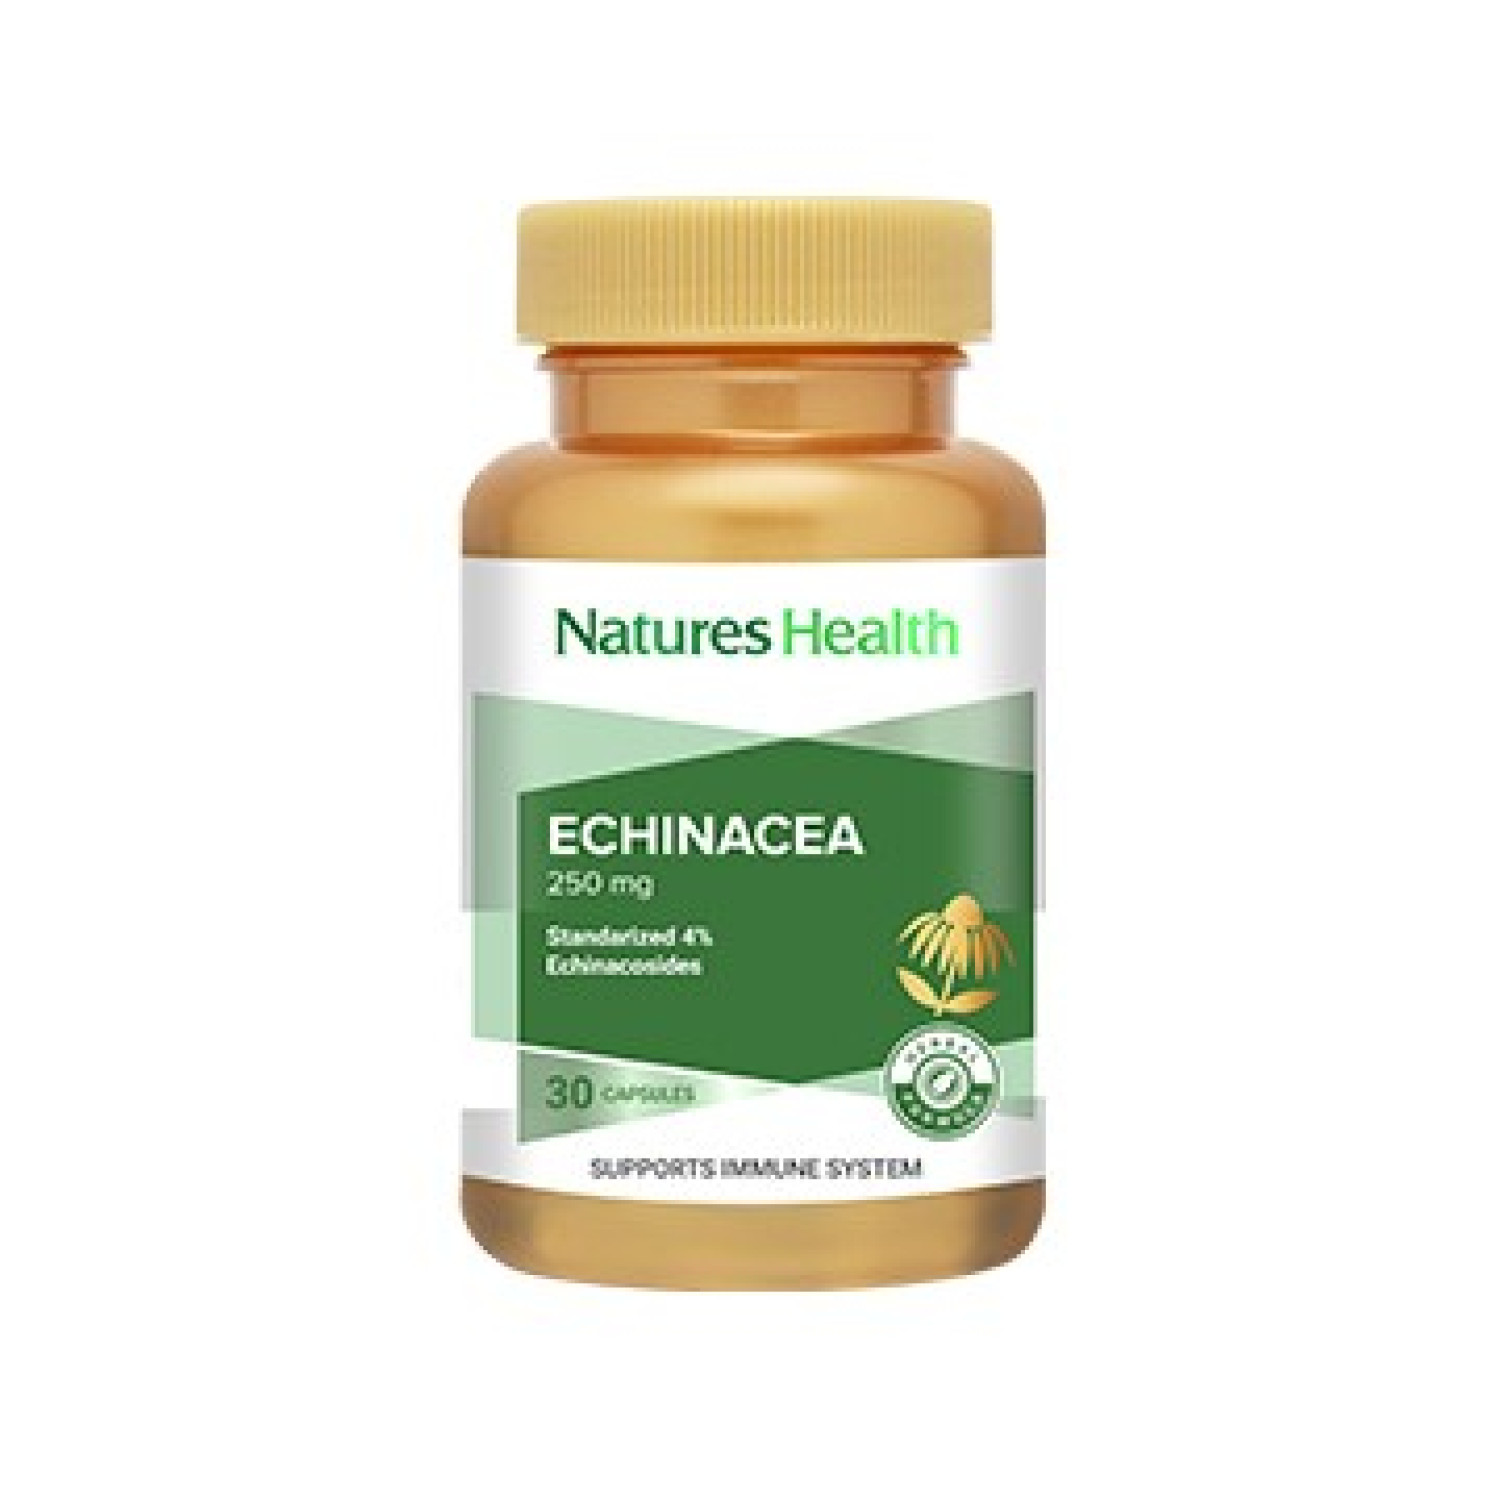 Natures Health Natures Health Echinacea